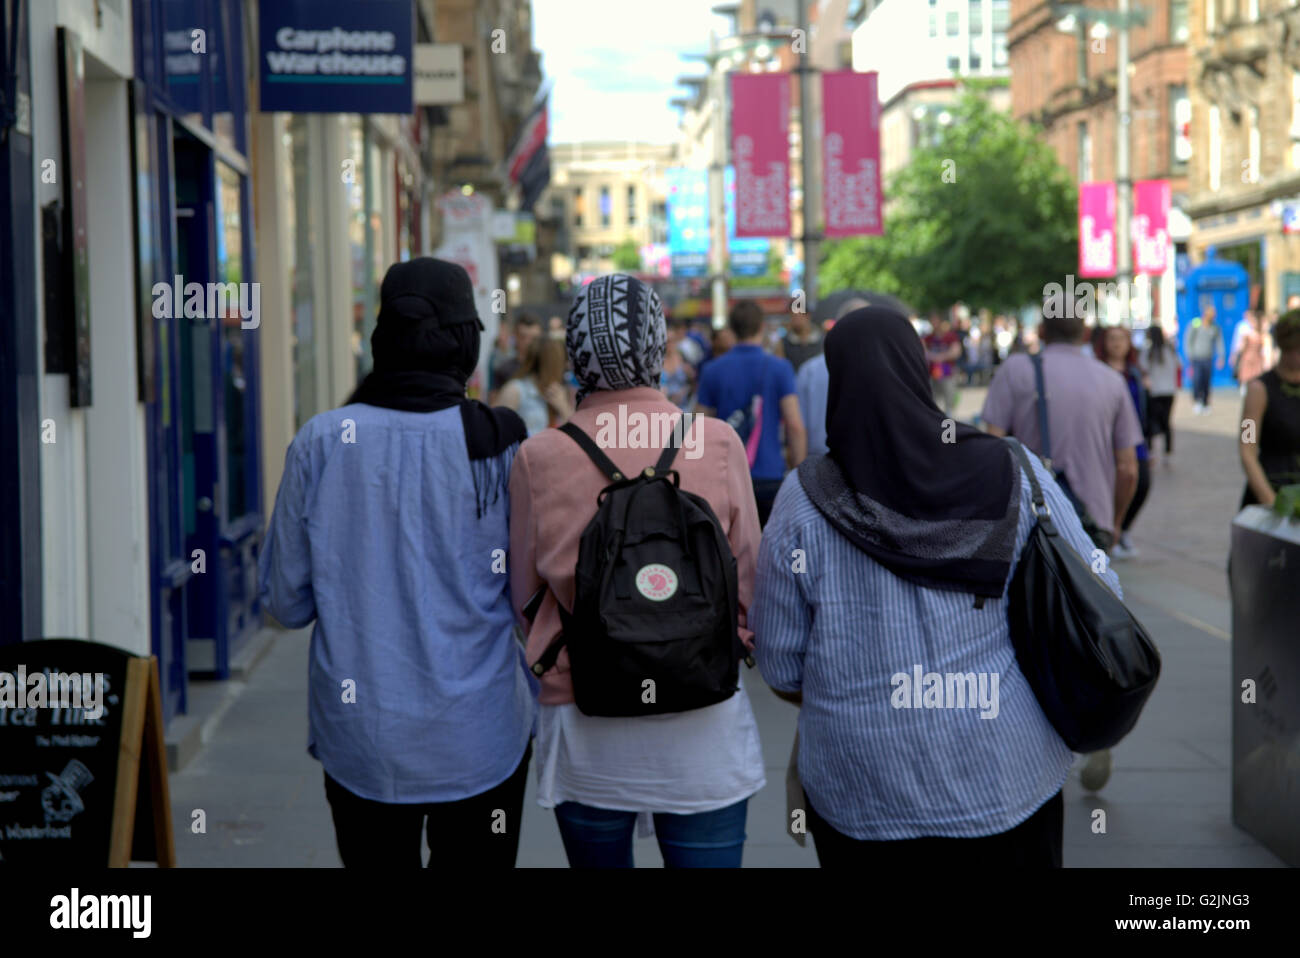 Three Muslim woman in headscarf's  on the city street Glasgow, Scotland, UK hijab scarf Stock Photo